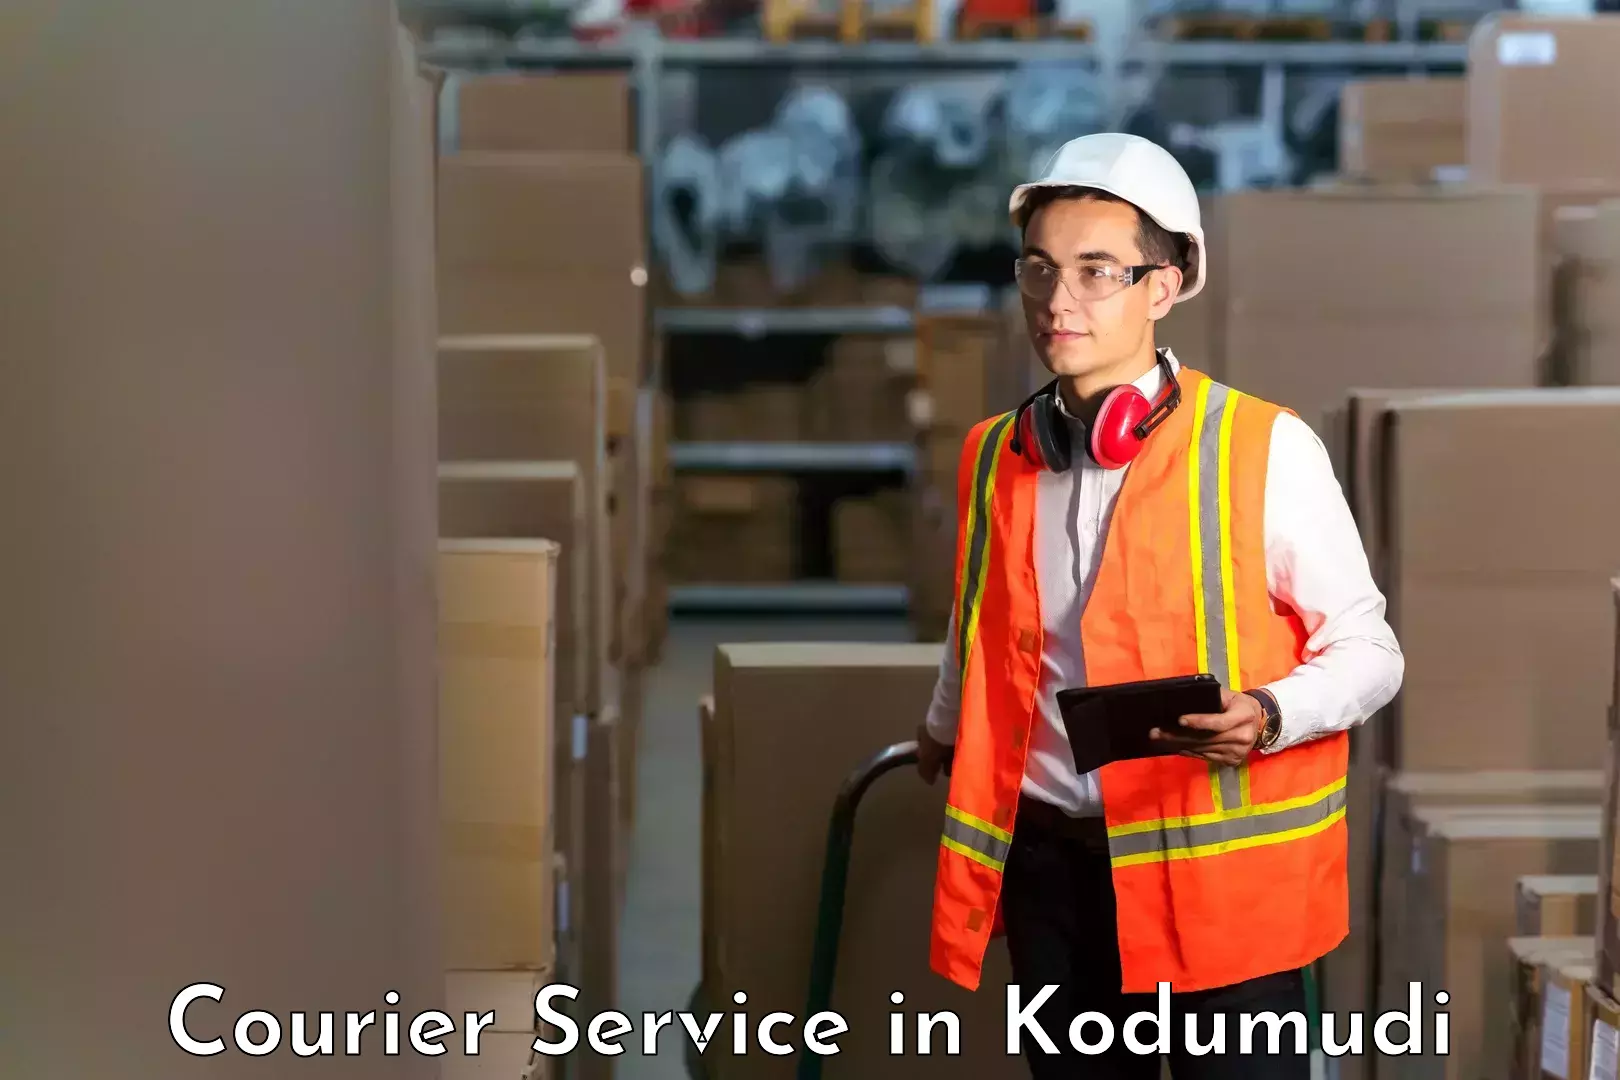 Courier service booking in Kodumudi